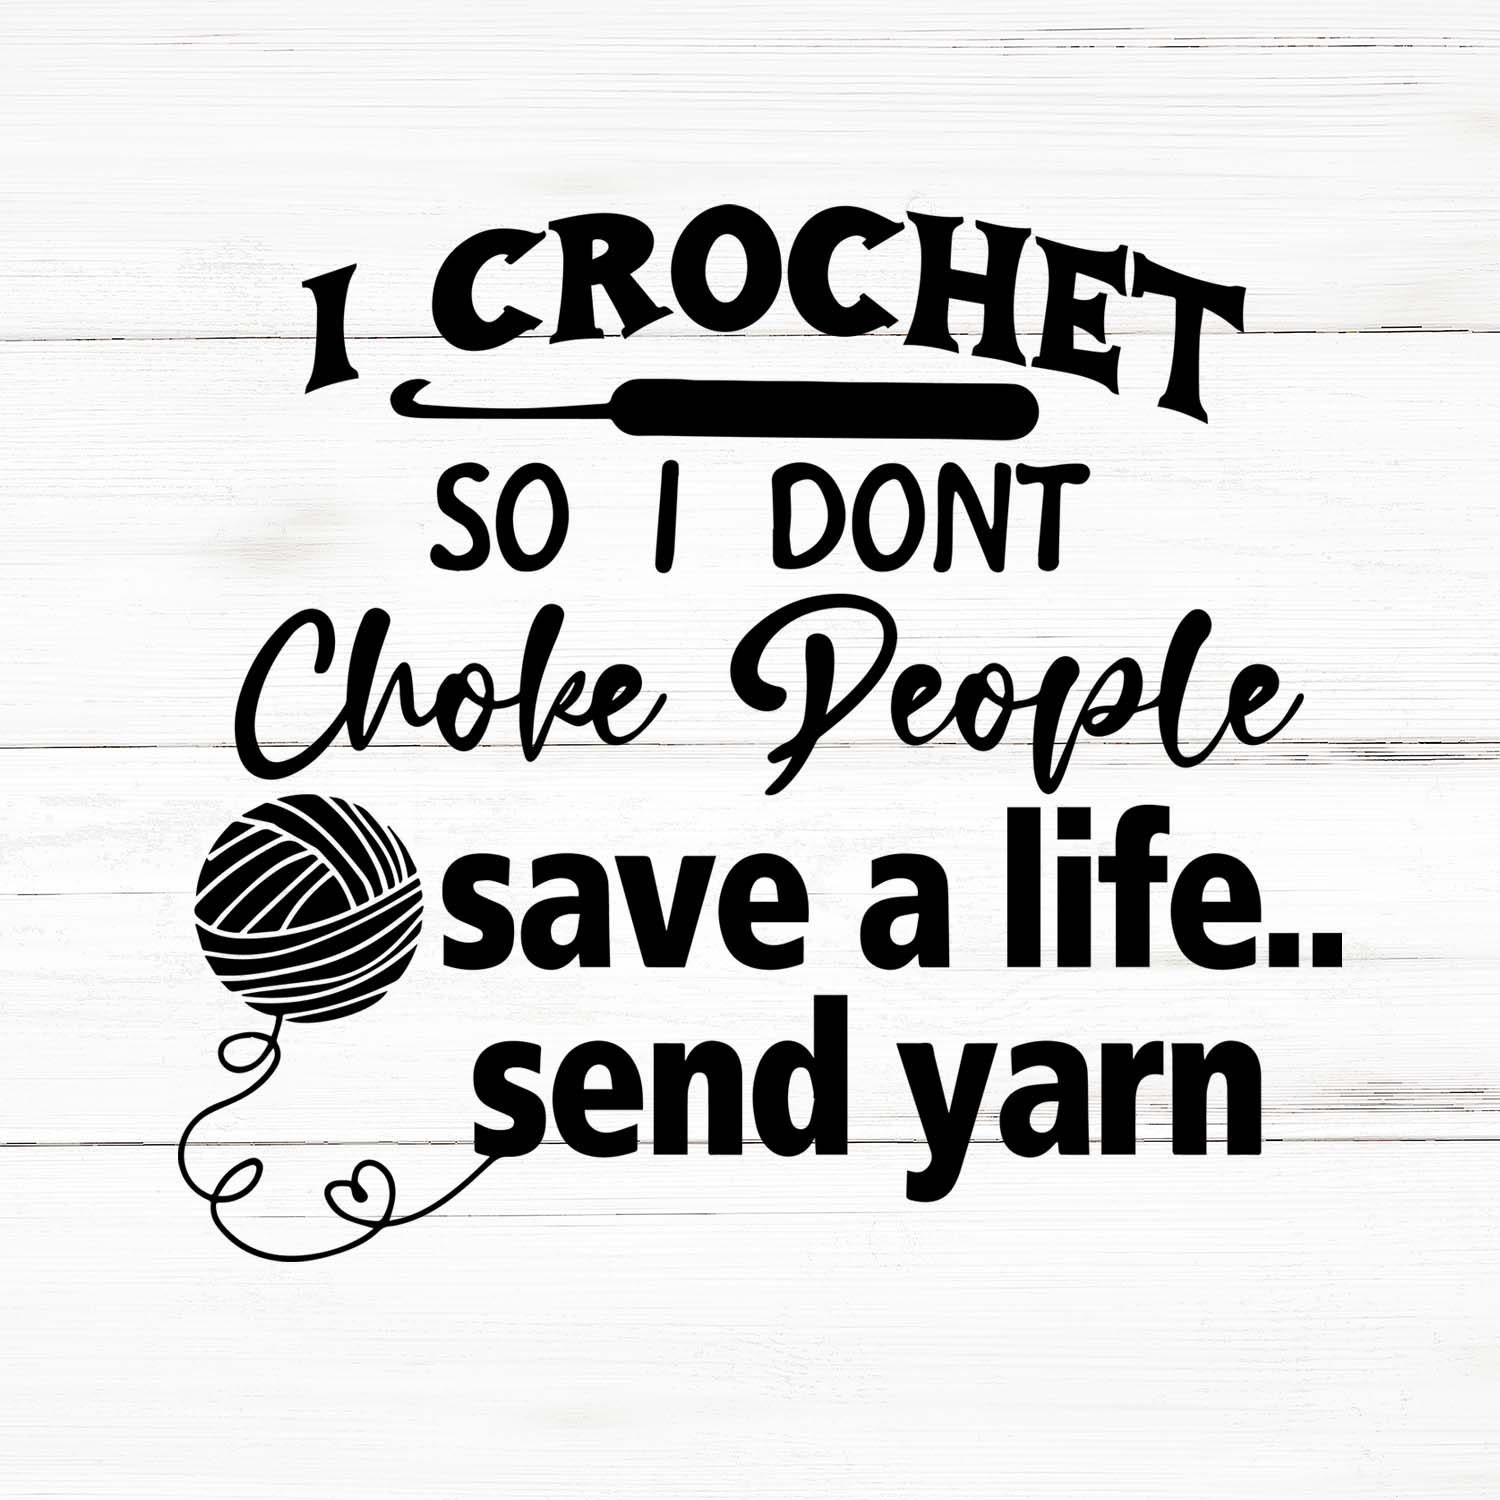 Crochet Svg Yarn Svg Crochet Hook Svg Practice Stitch Craft Yarn Bag Sign  Funny Shirt Adult Humor Funny Saying 